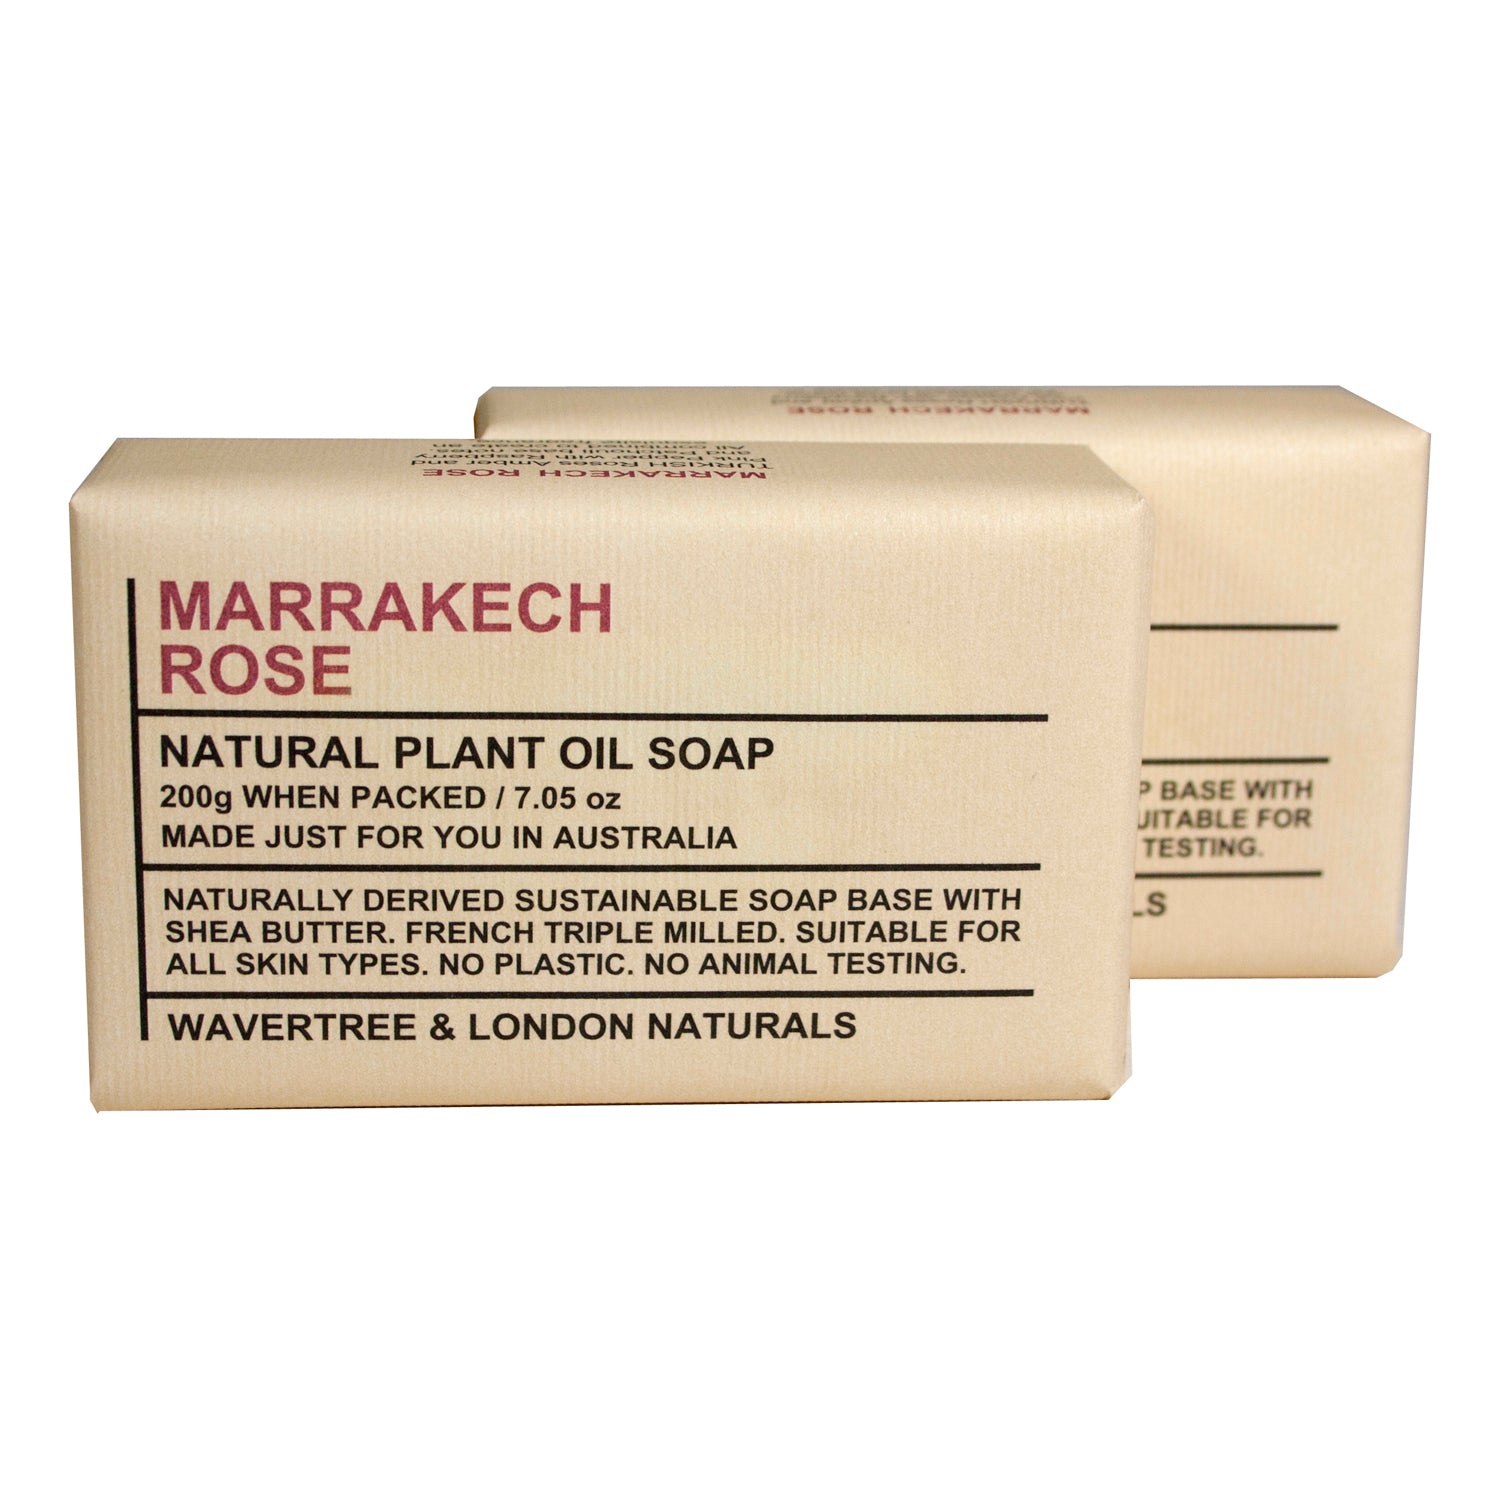 Wavertree & London Marakech Rose Triple Milled 7oz. Soap Bars (2) - Premium Quality, Made in Australia